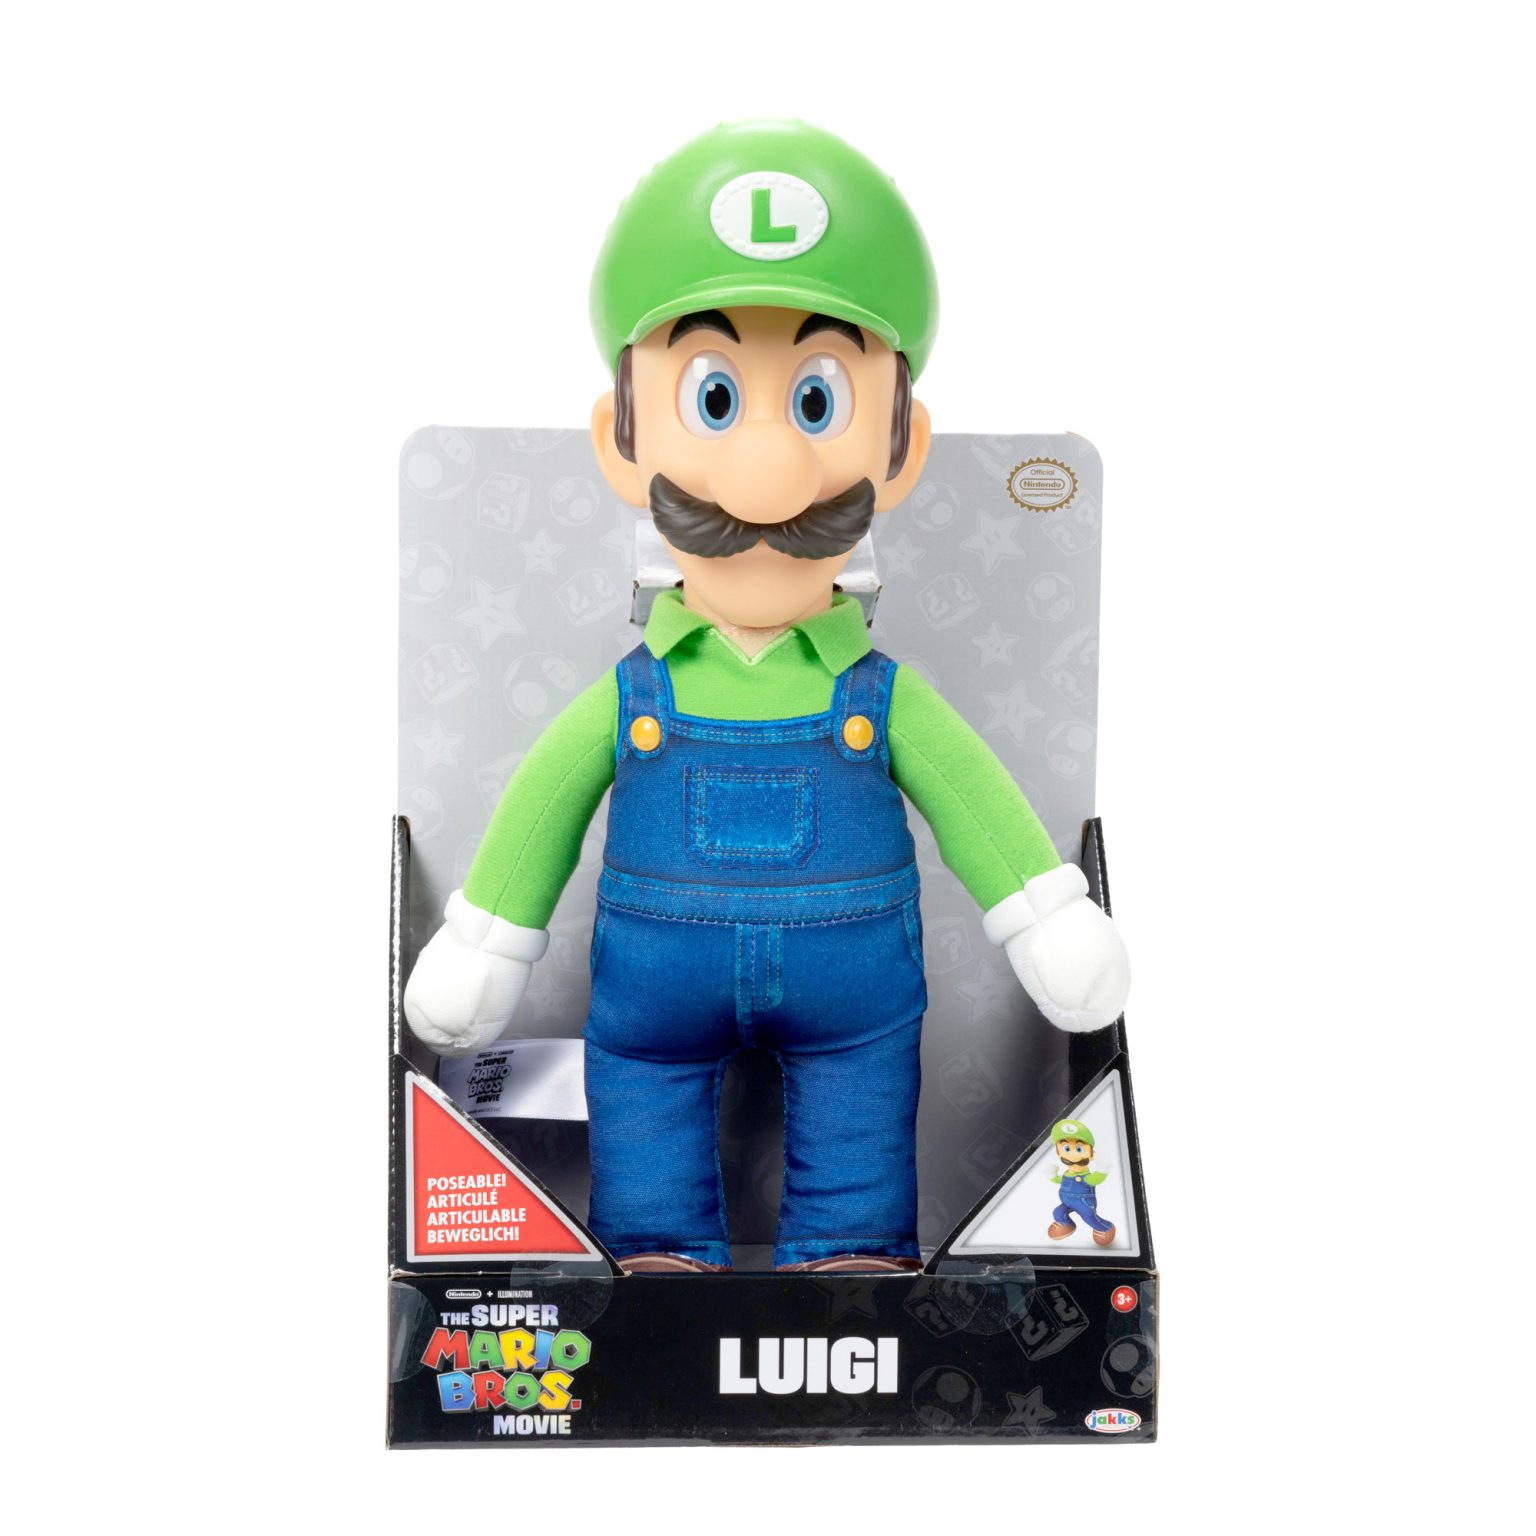 The Super Mario Bros. Movie 15" Posable Plush Luigi